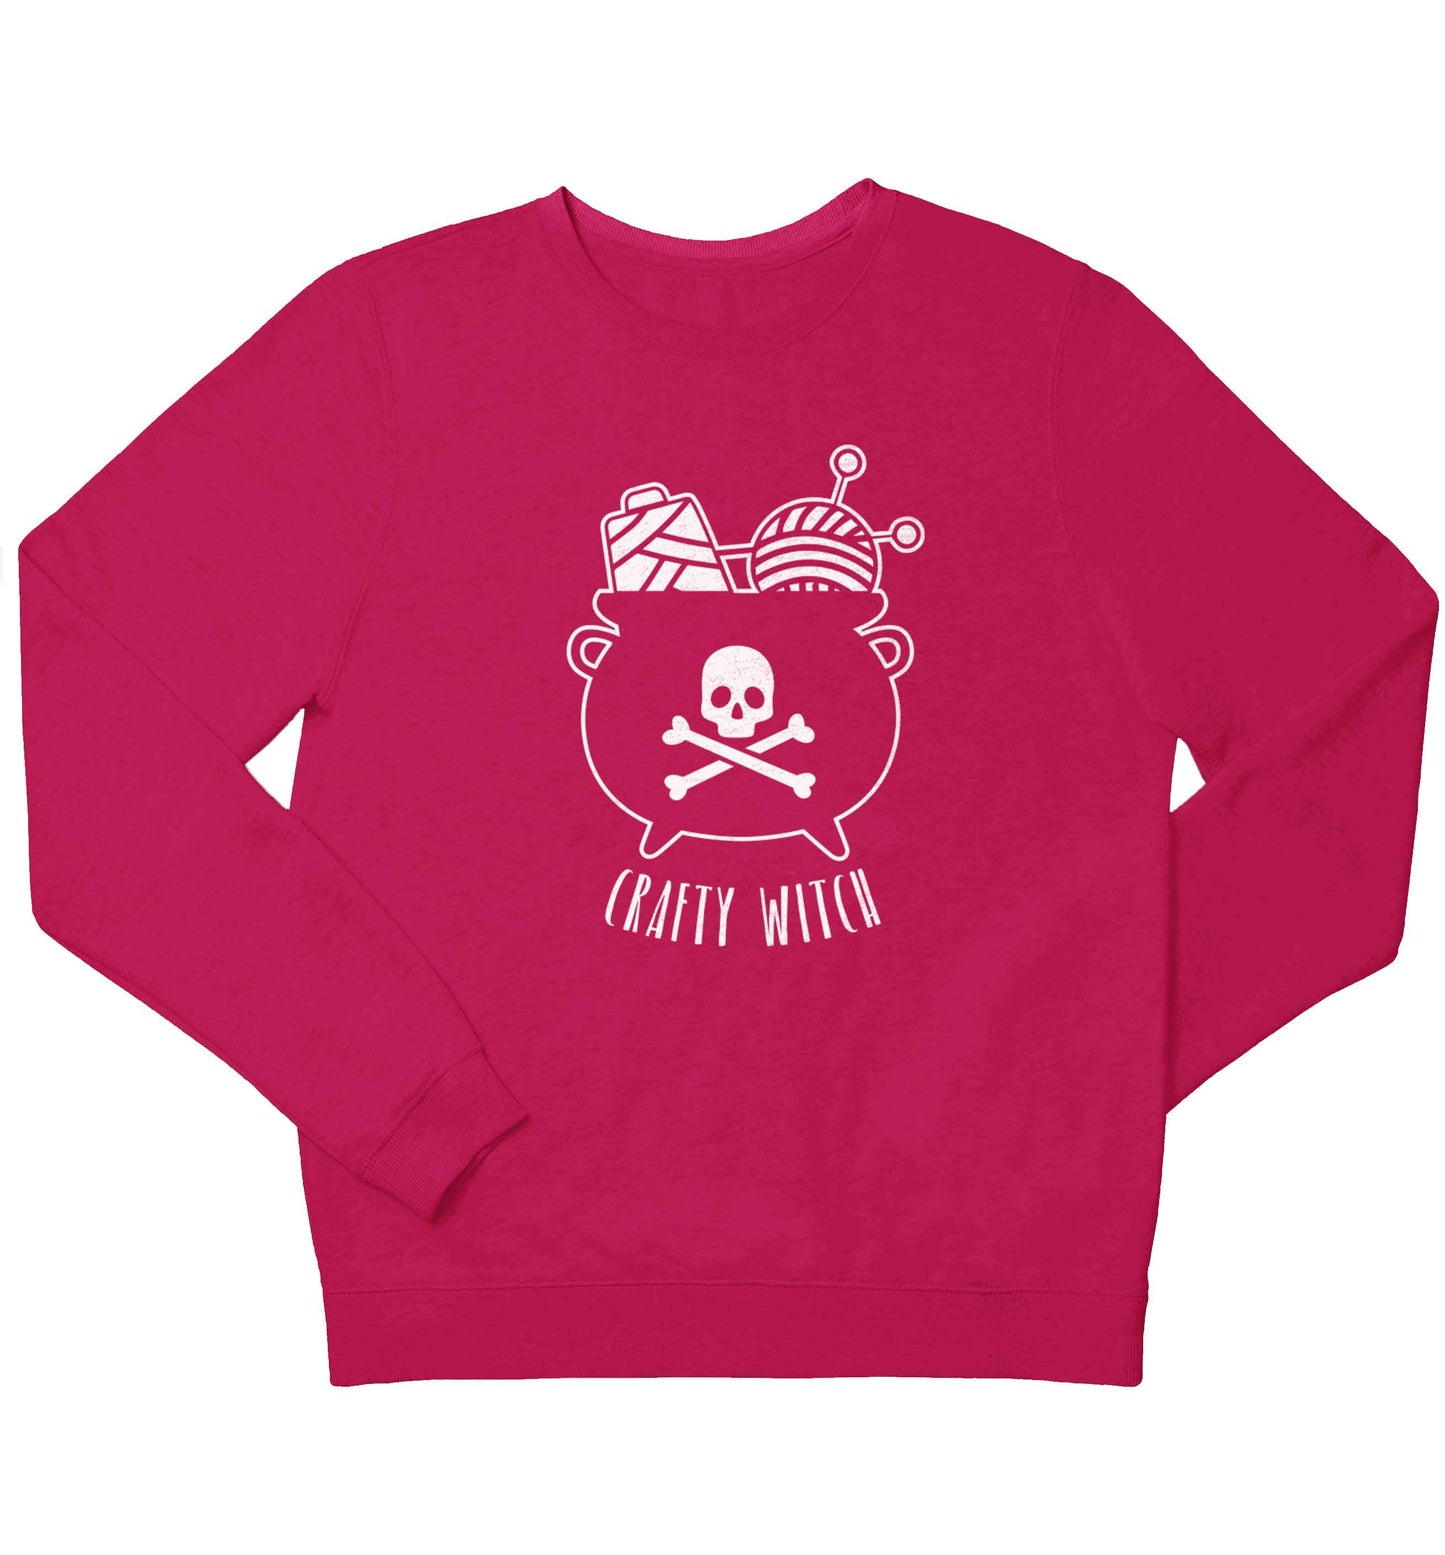 Crafty witch children's pink sweater 12-13 Years